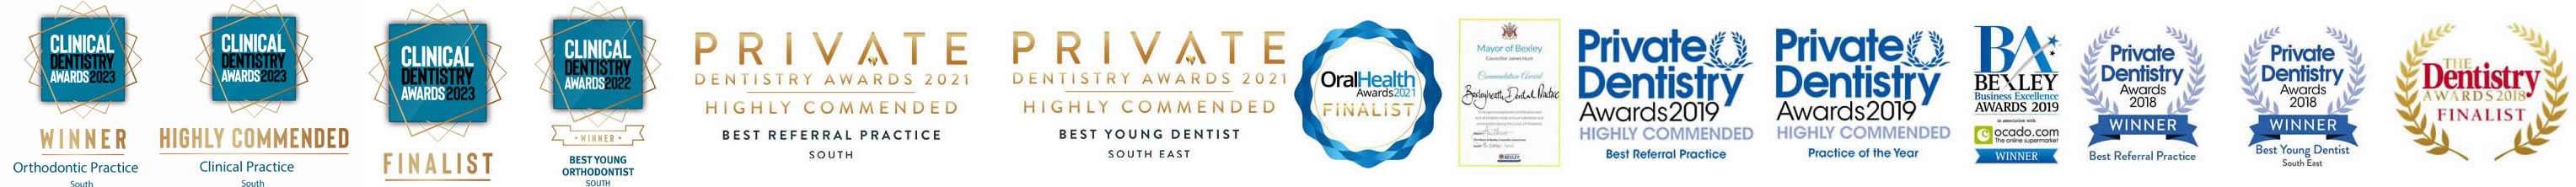 The Sandford Bexleyheath finalist in 2019 dental awards